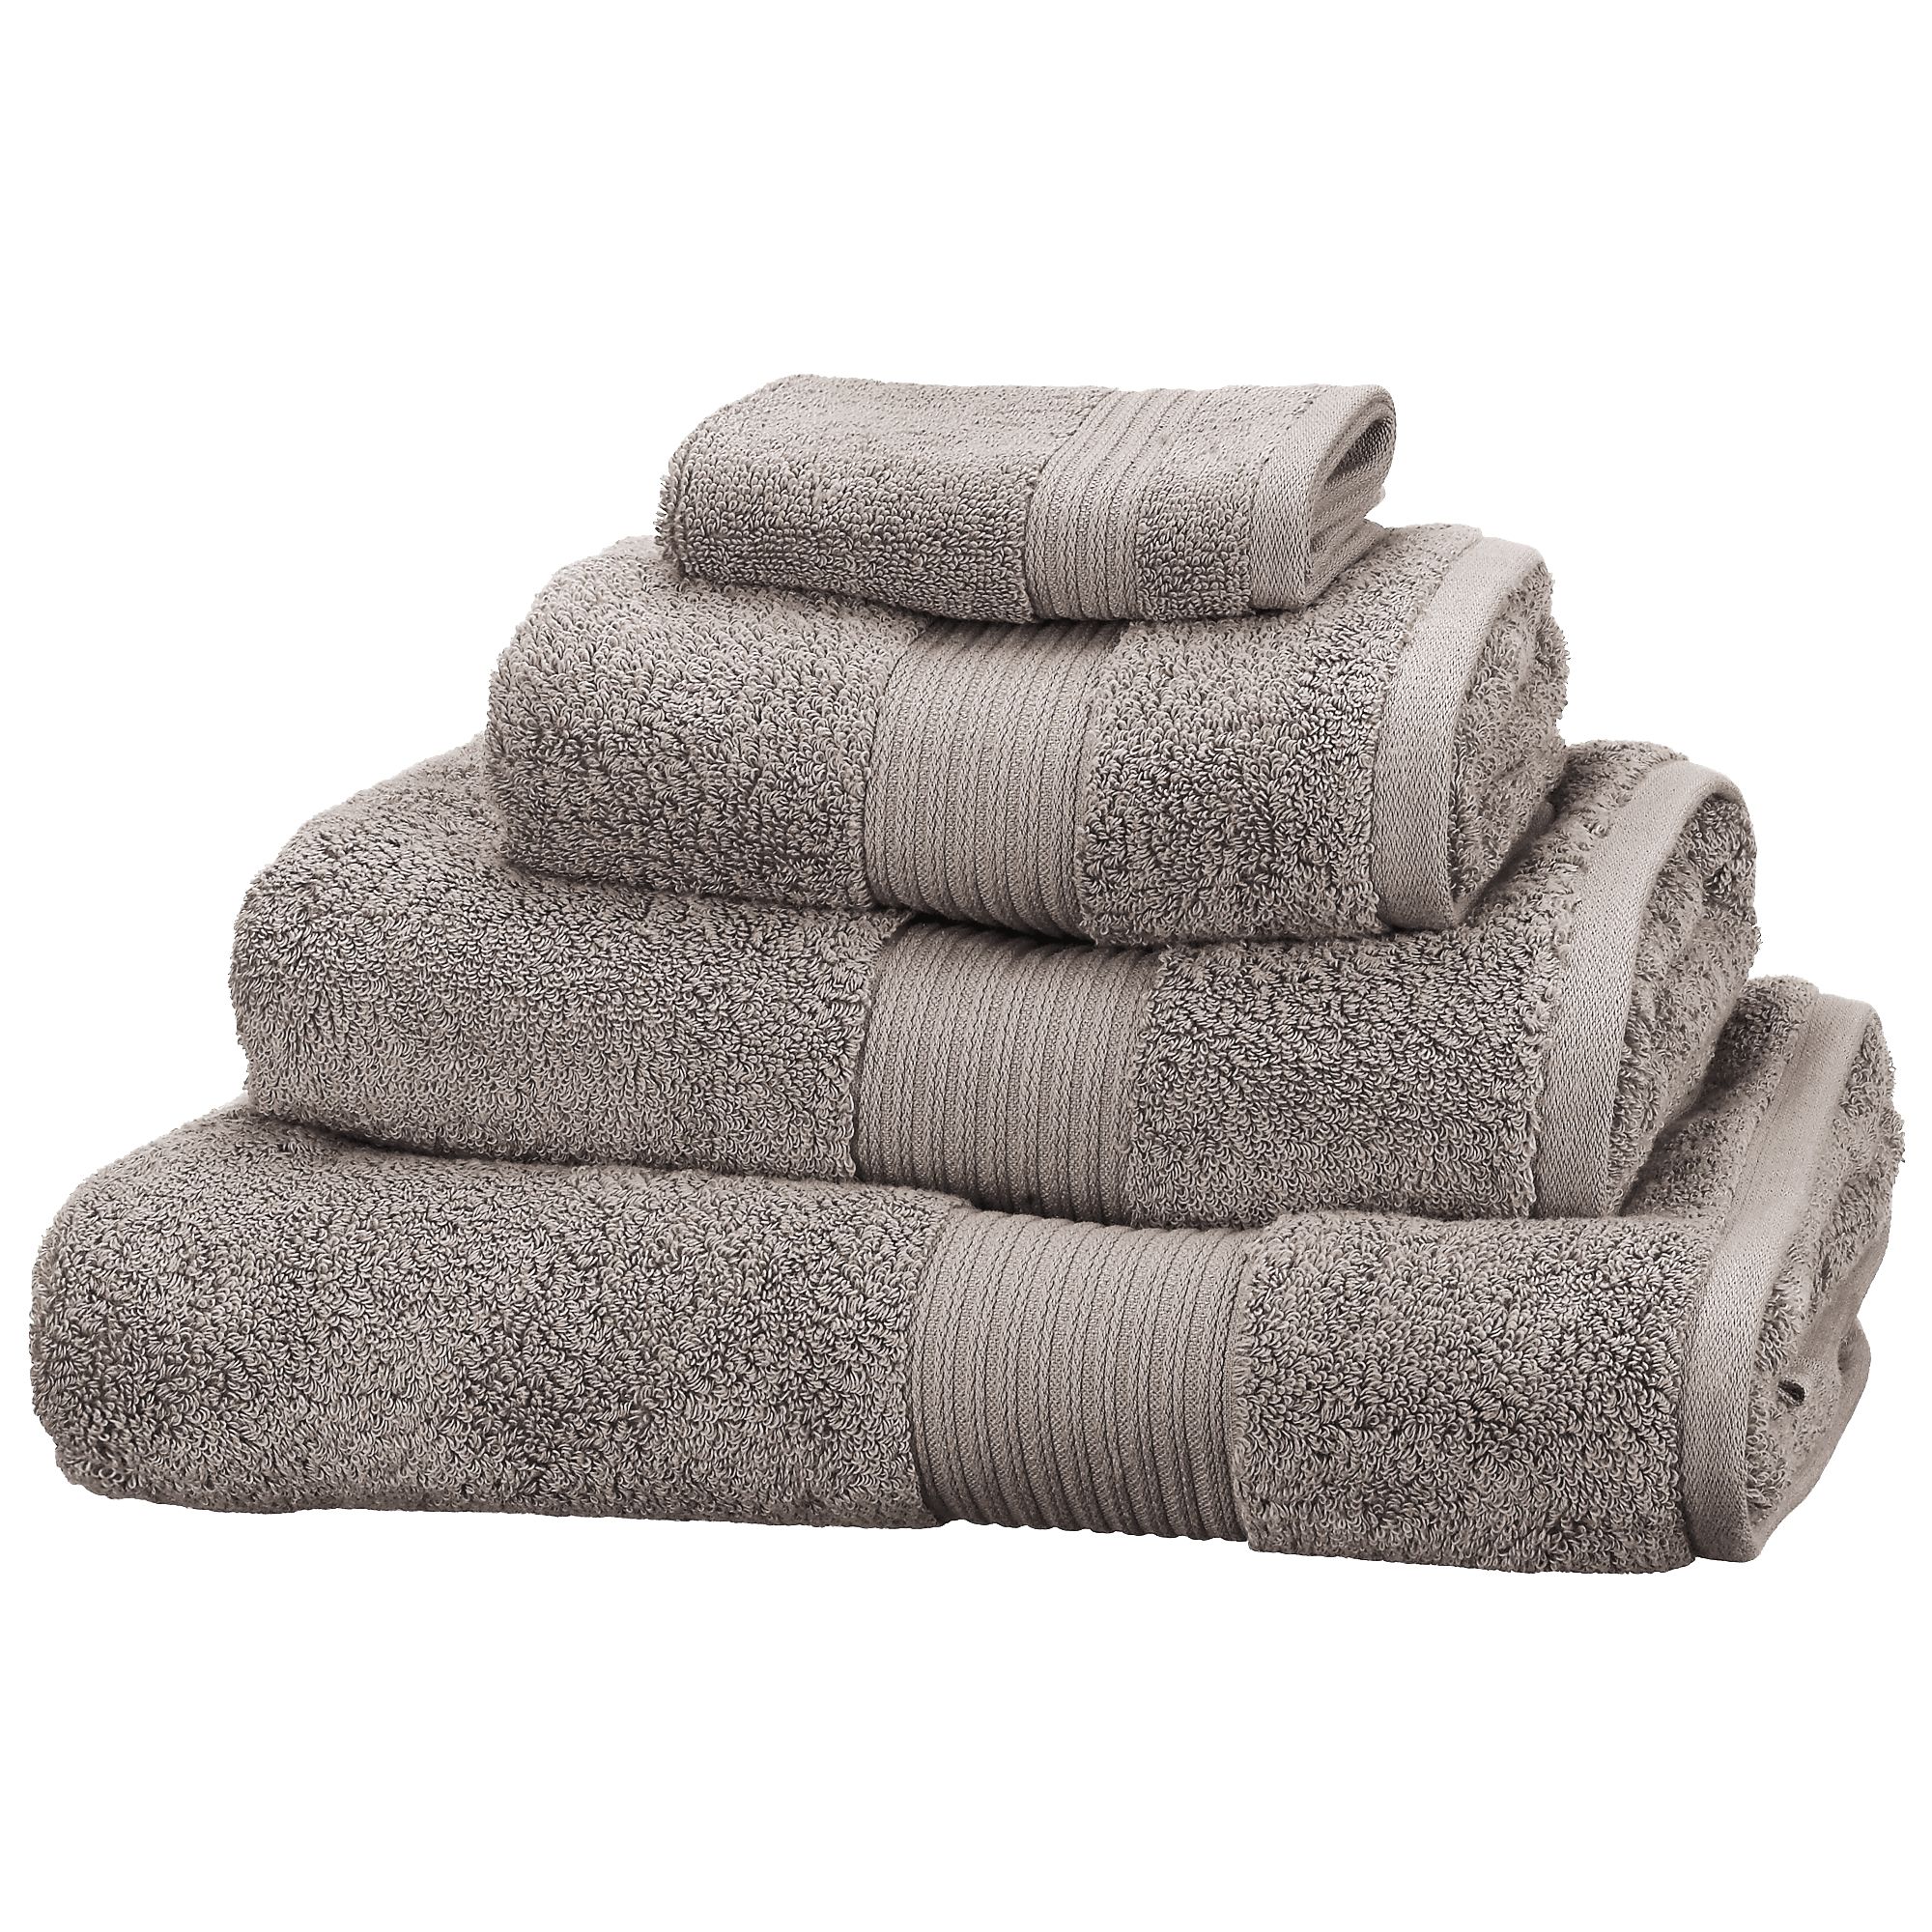 John Lewis Pure Cotton Towels, Smoke 109998